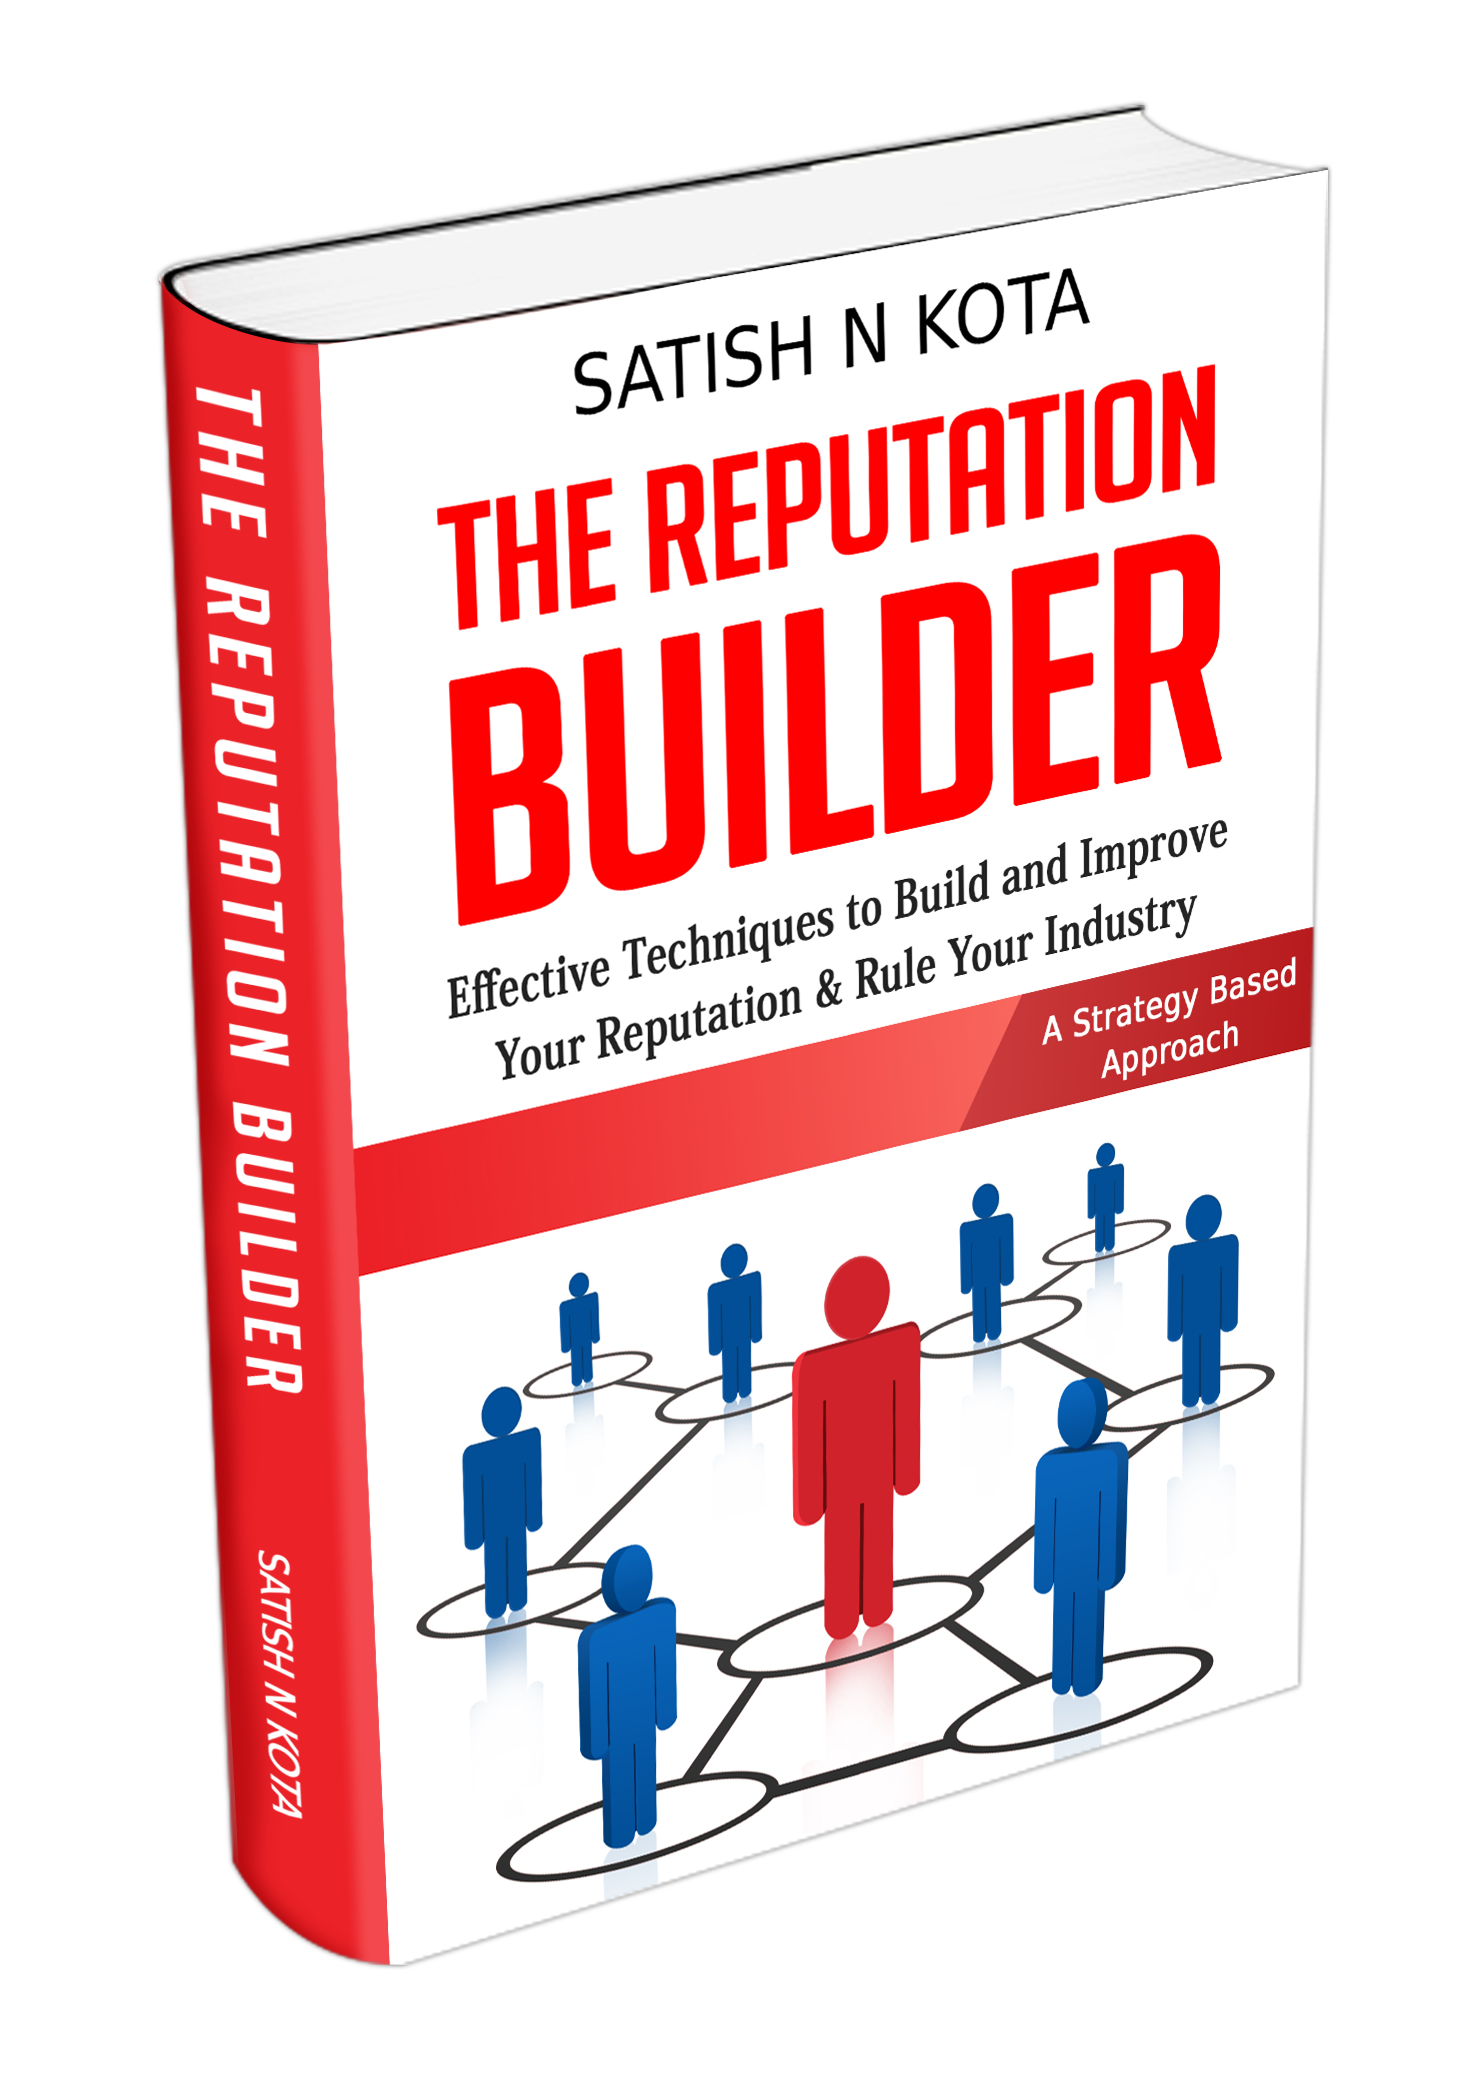 The reputation Builder Book